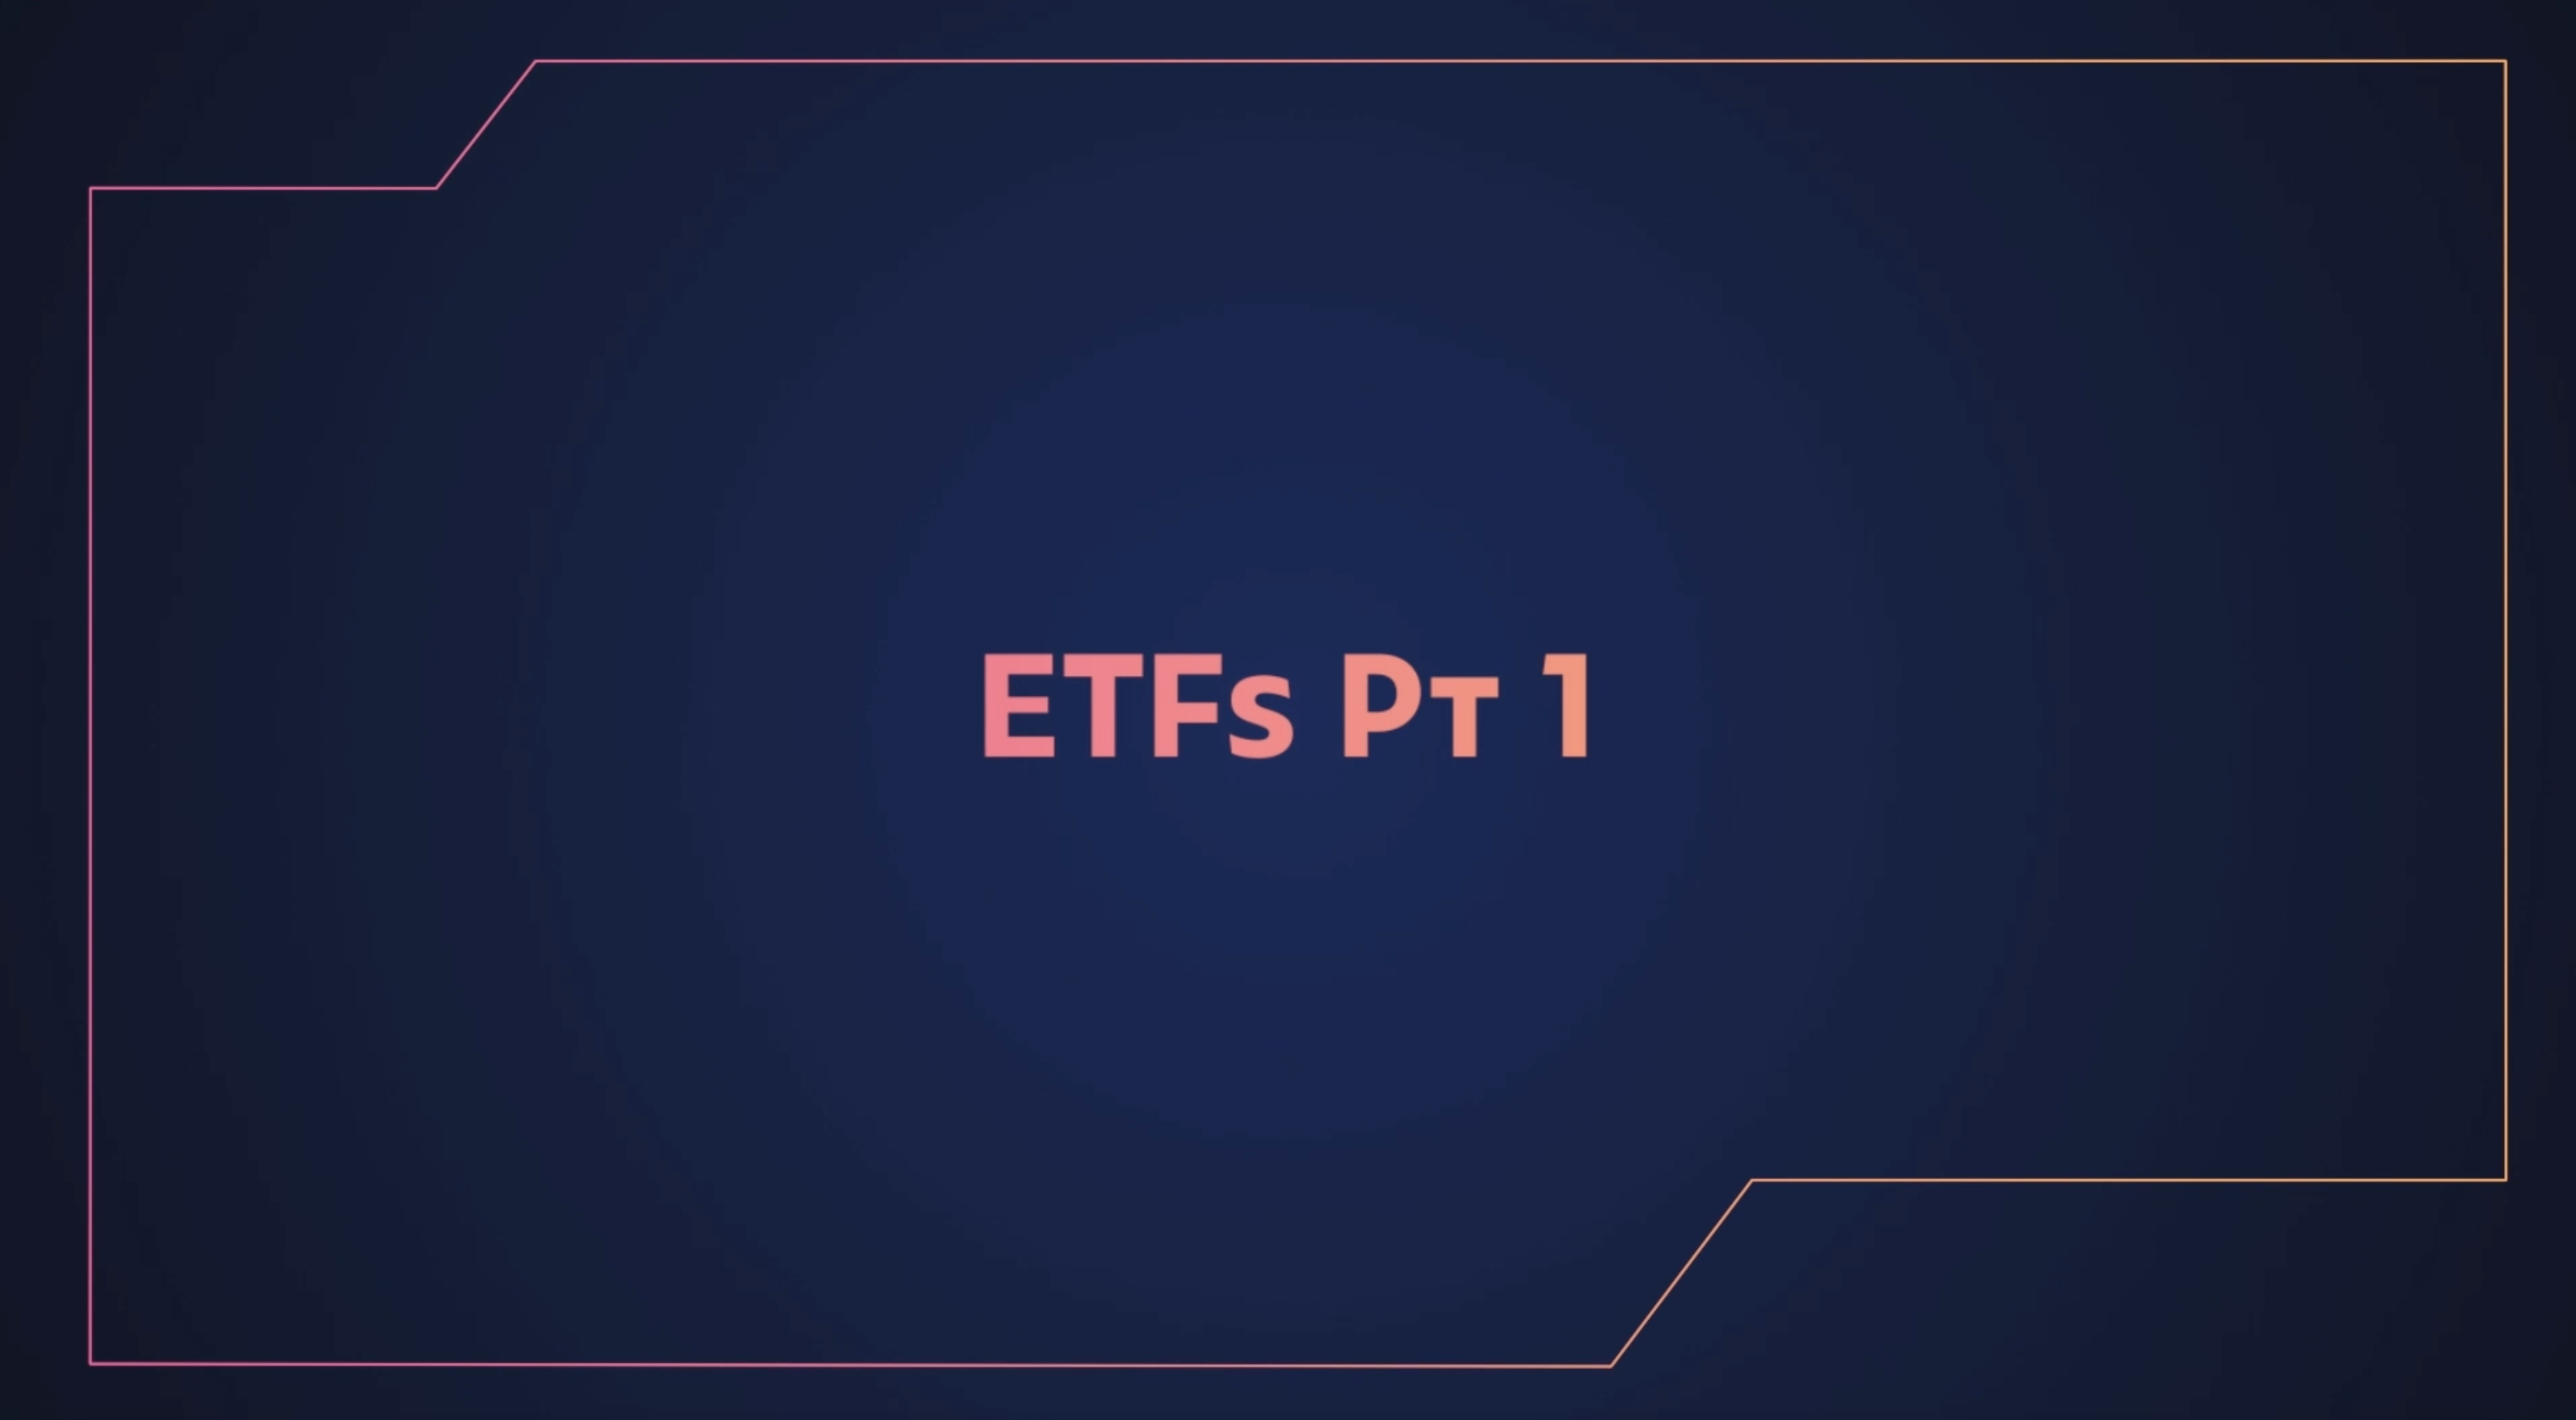 ETFs saw record inflows in 2021